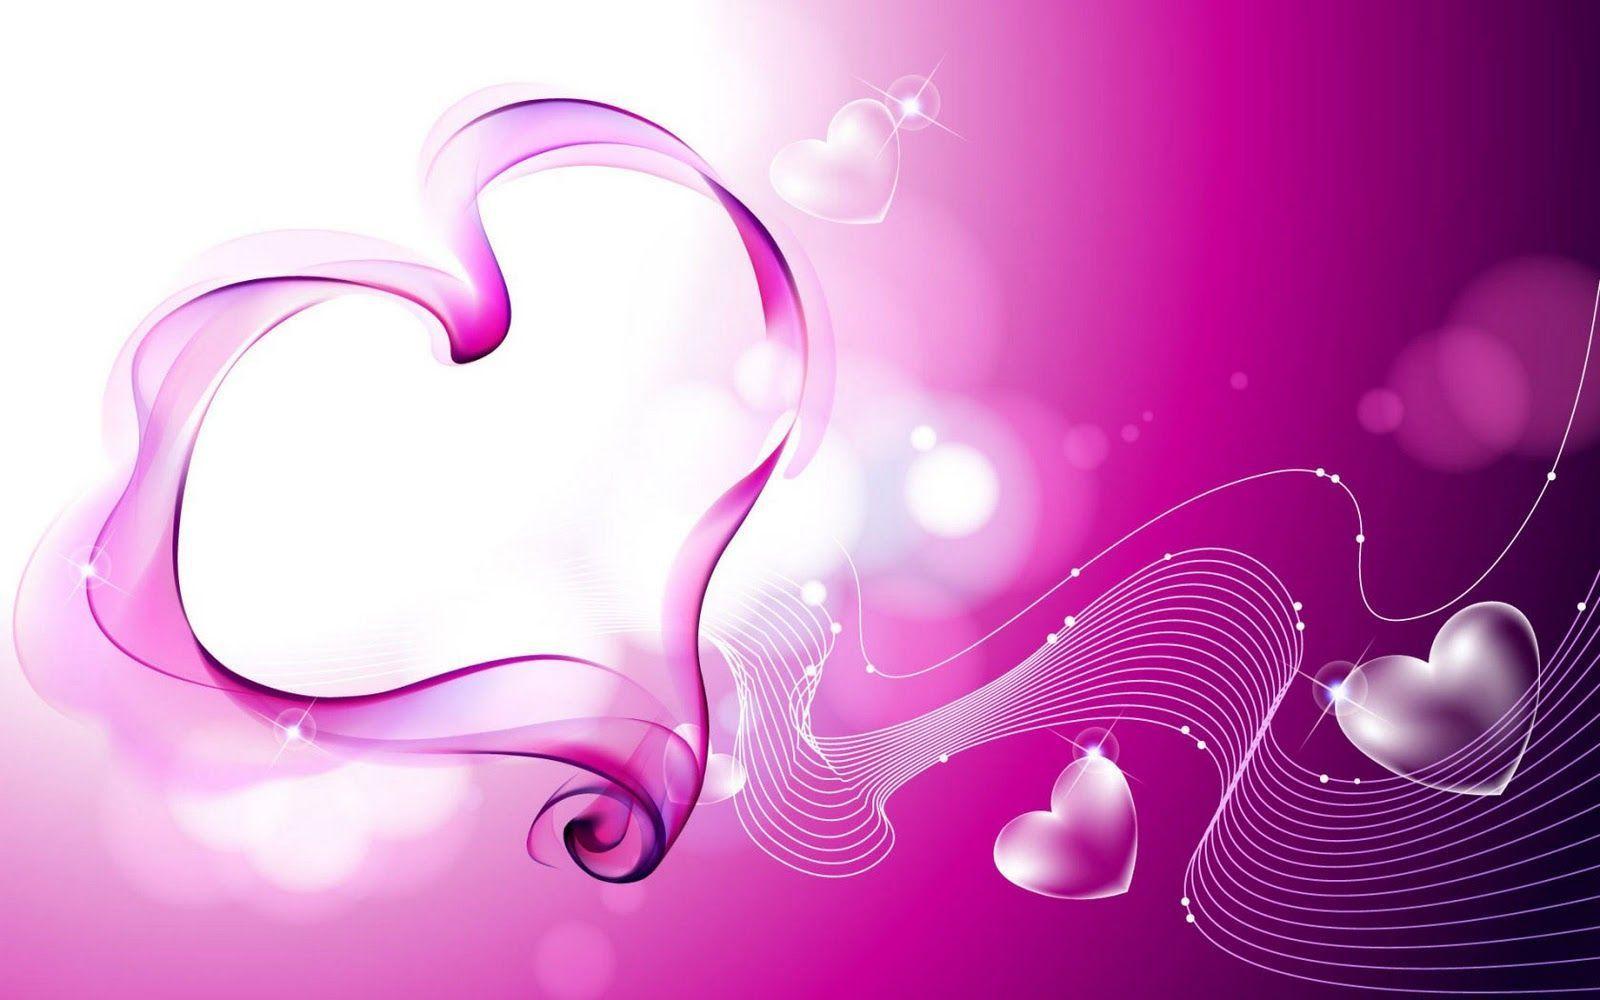 Wallpaper For > Beautiful Love Wallpaper For Desktop